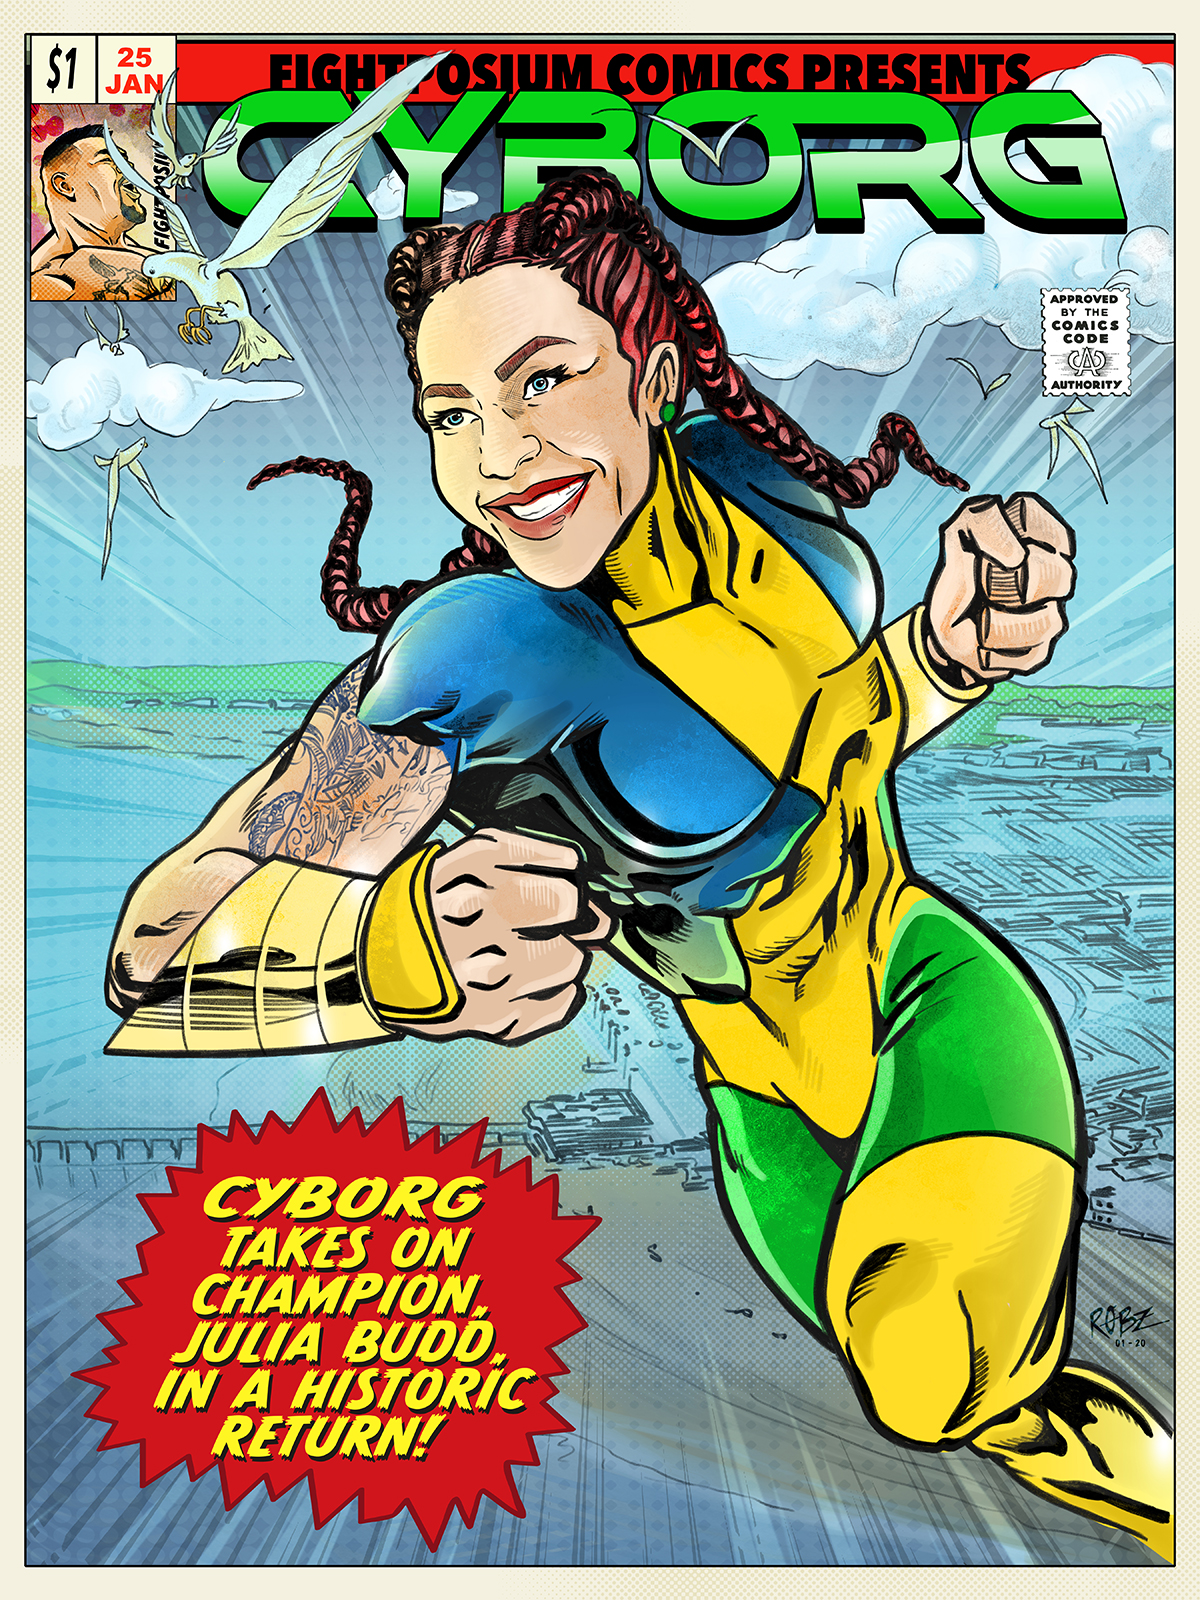 Cris Cyborg's Historic Return!